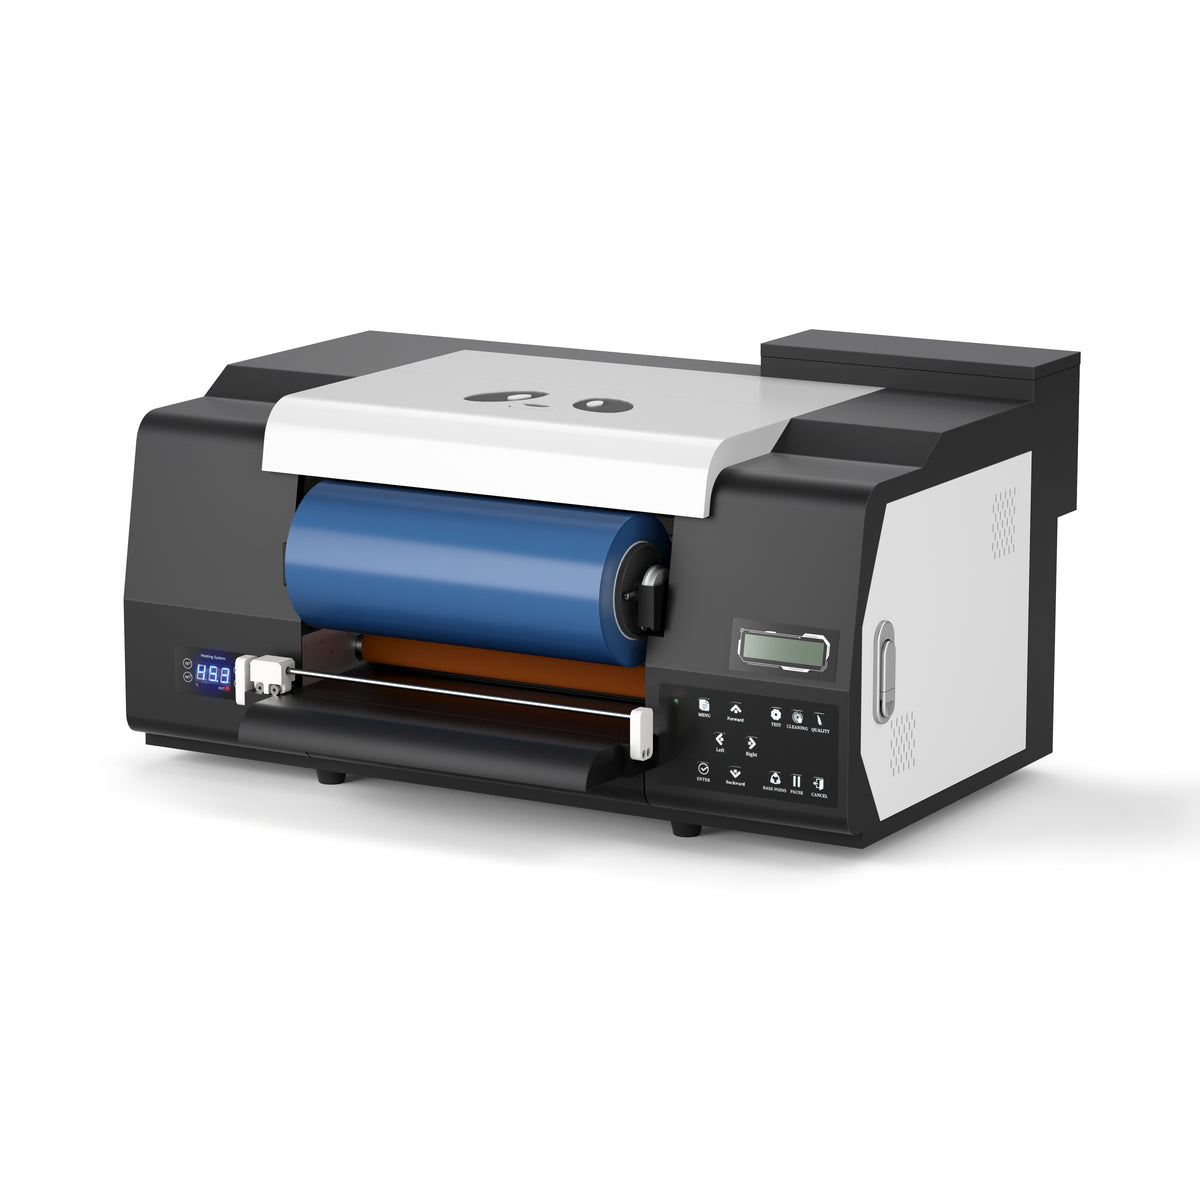 The best 🫶🏻 @Procolored Printers ❤️ #diy #dtfprinting #dtf